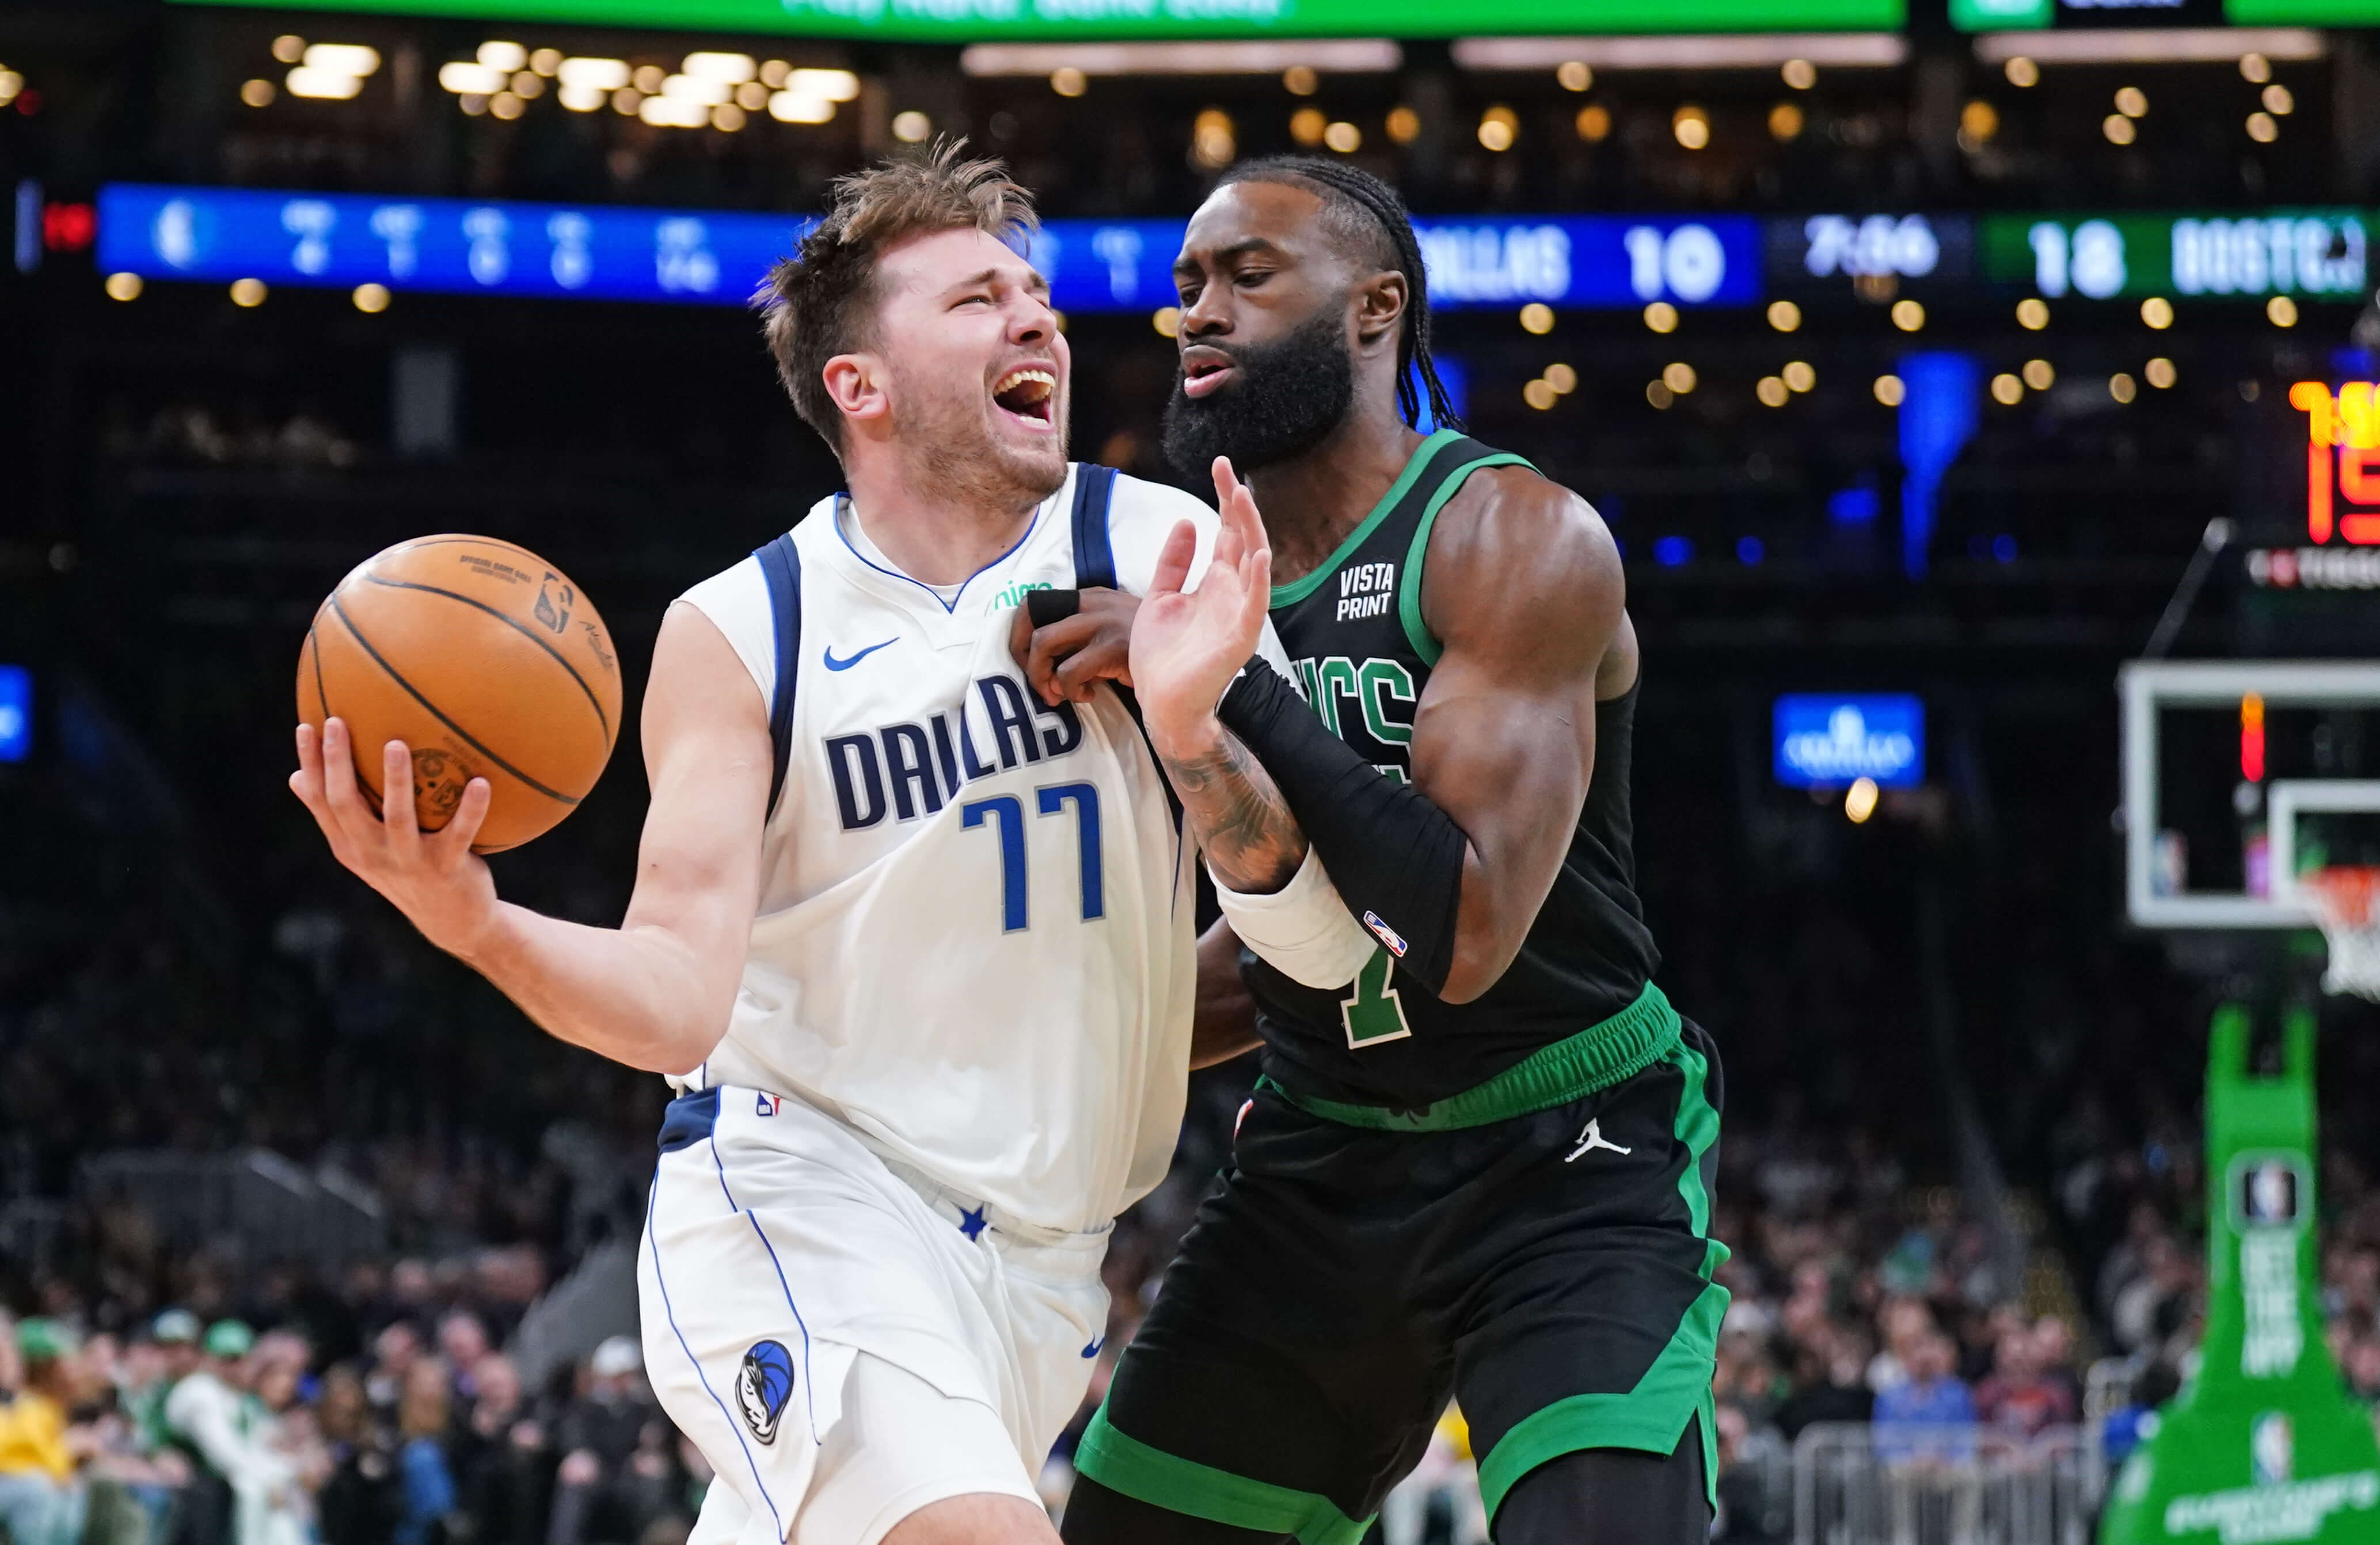 How To Bet - Bettors Going Big on Mavericks Over Favored Celtics in NBA Finals